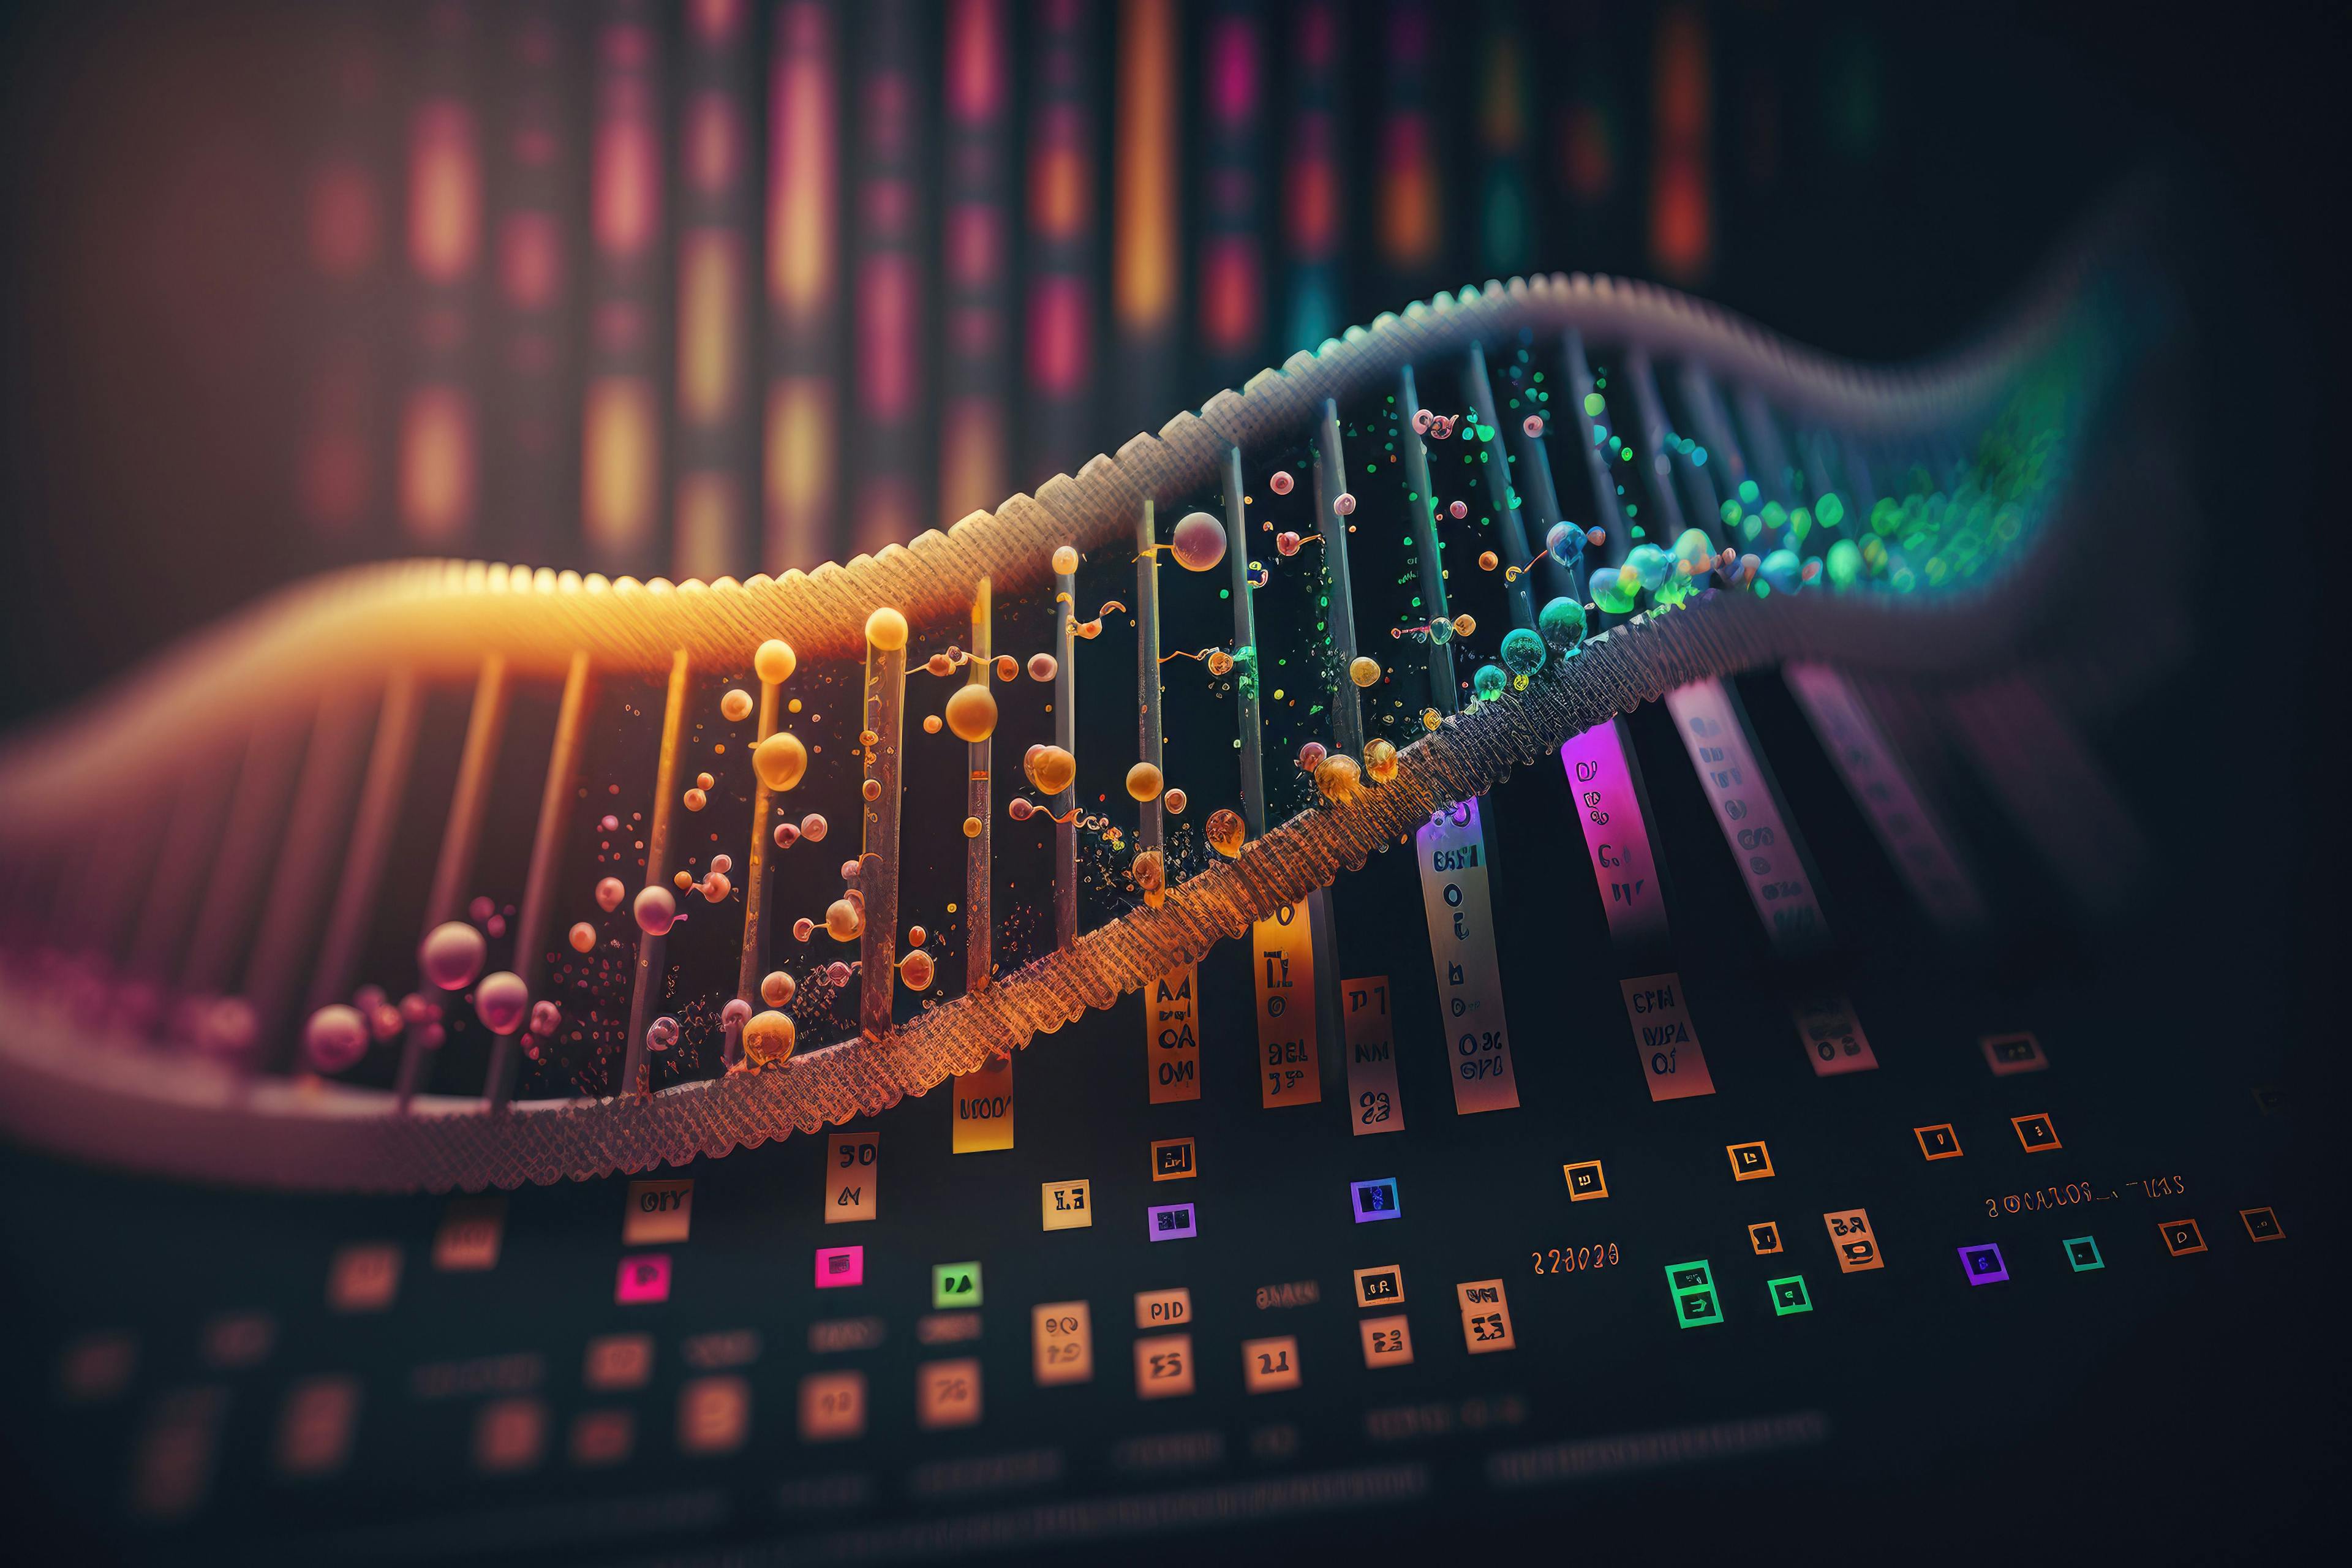 DNA Sequence Concept | image credit: MuhammadHafiz - stock.adobe.com